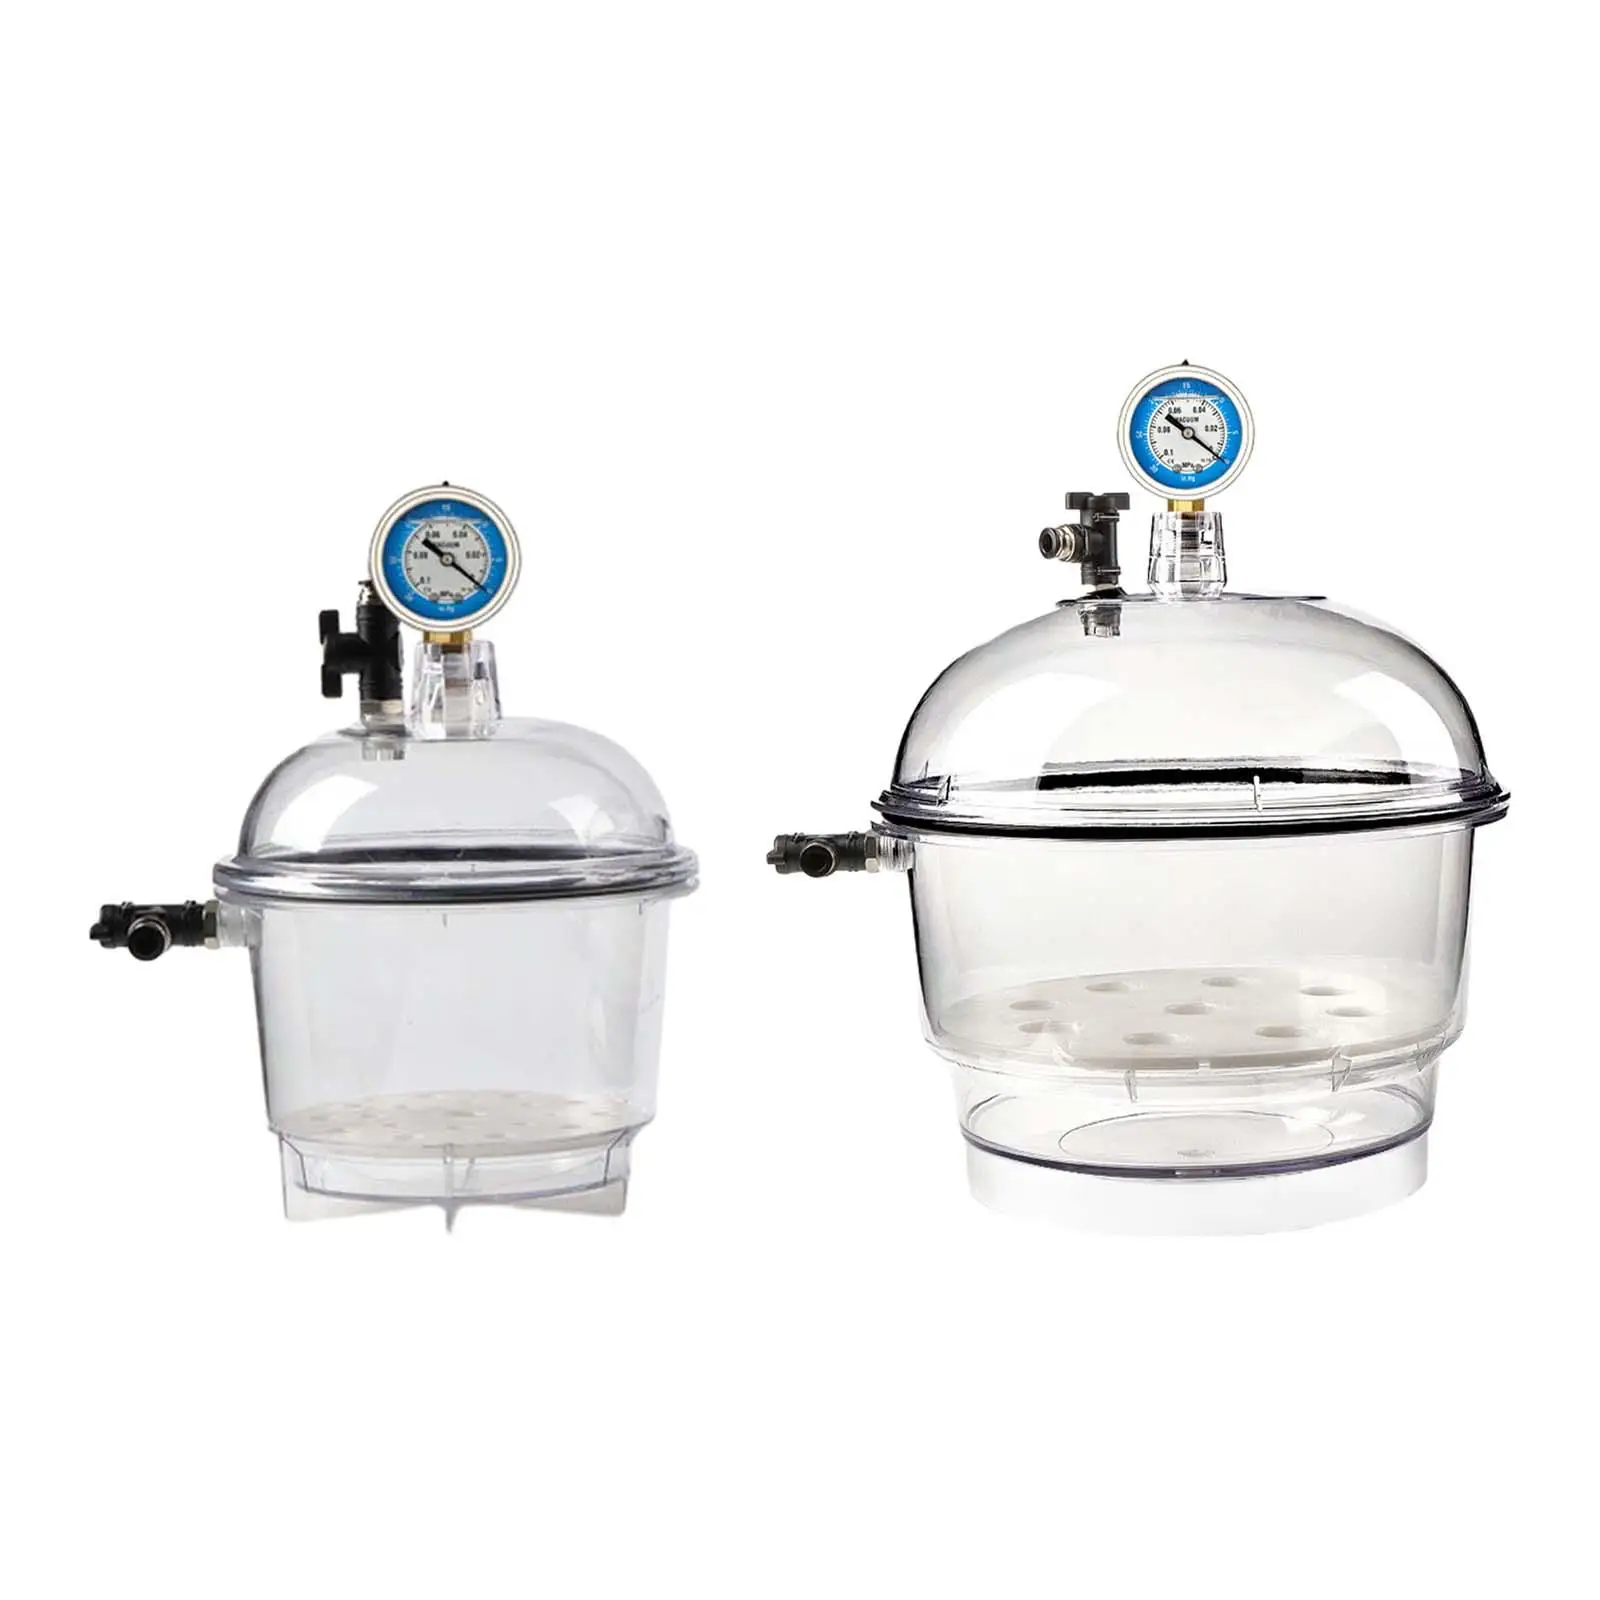 Vacuum Desiccators Drying Vessel Glassware Polycarbonate Storage Tank Laboratory Dryer Bottle Vacuum Dryer Small Lab Desiccator